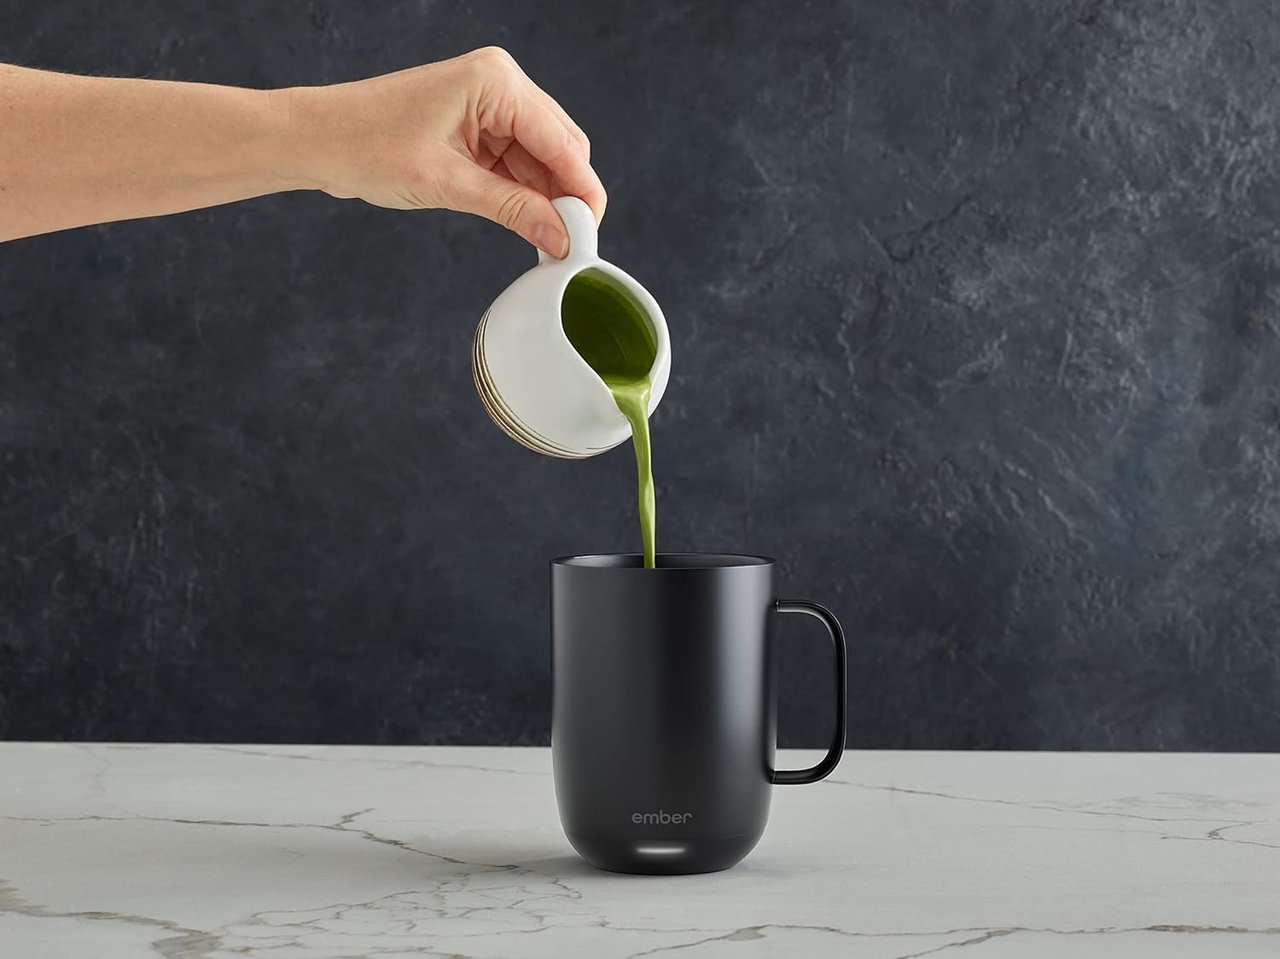 5 Ember 2 Smart Mug, 414 ml, Black, 80 min. Battery Life – App-Controlled Heated Mug – Upgraded Design